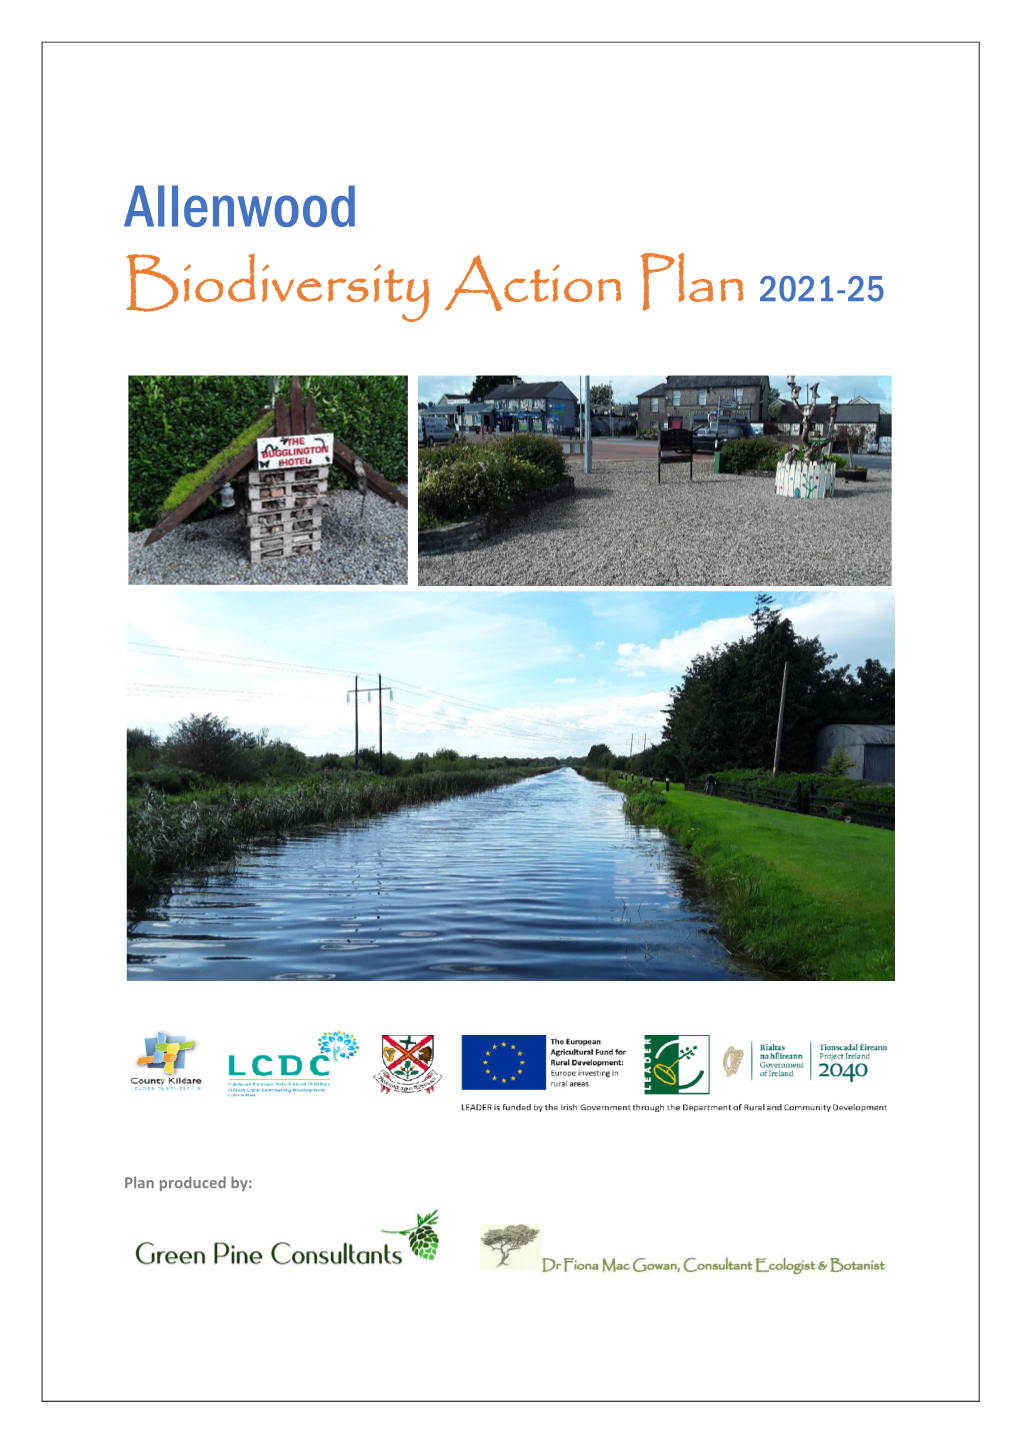 Allenwood Biodiversity Action Plan 2021